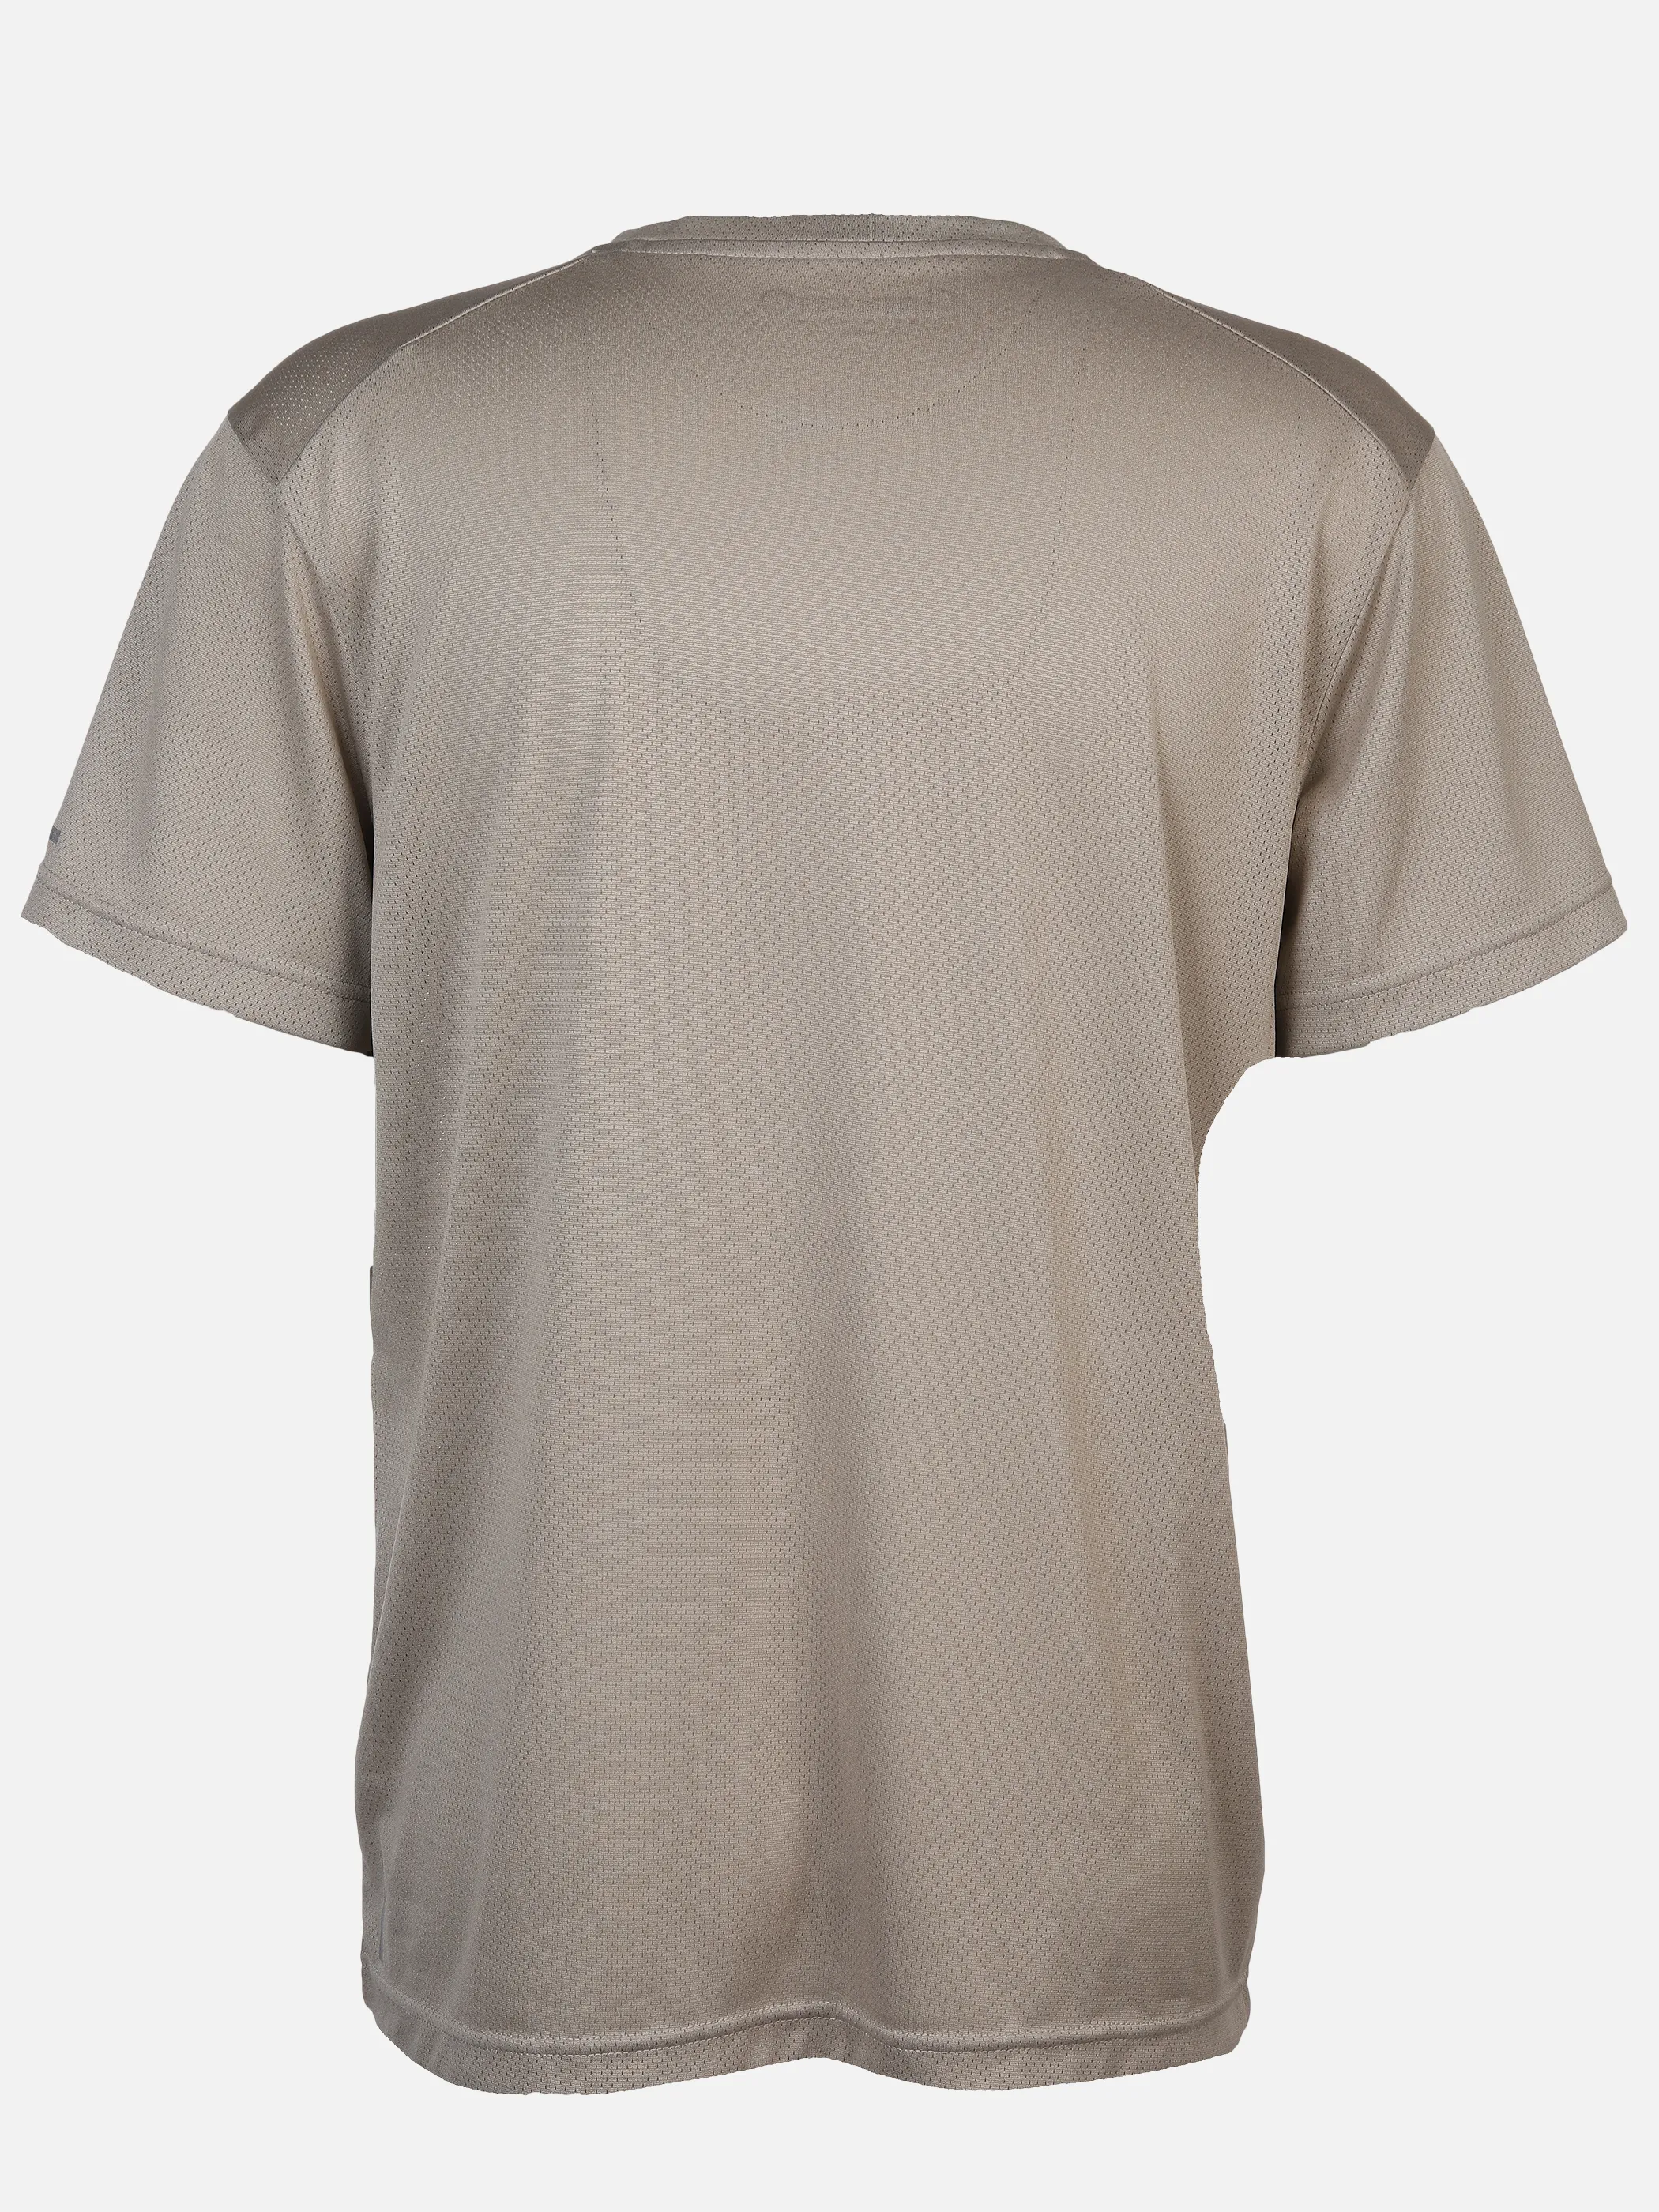 Grinario Sports He- Sport T-Shirt Beige 890157 BEIGE 2